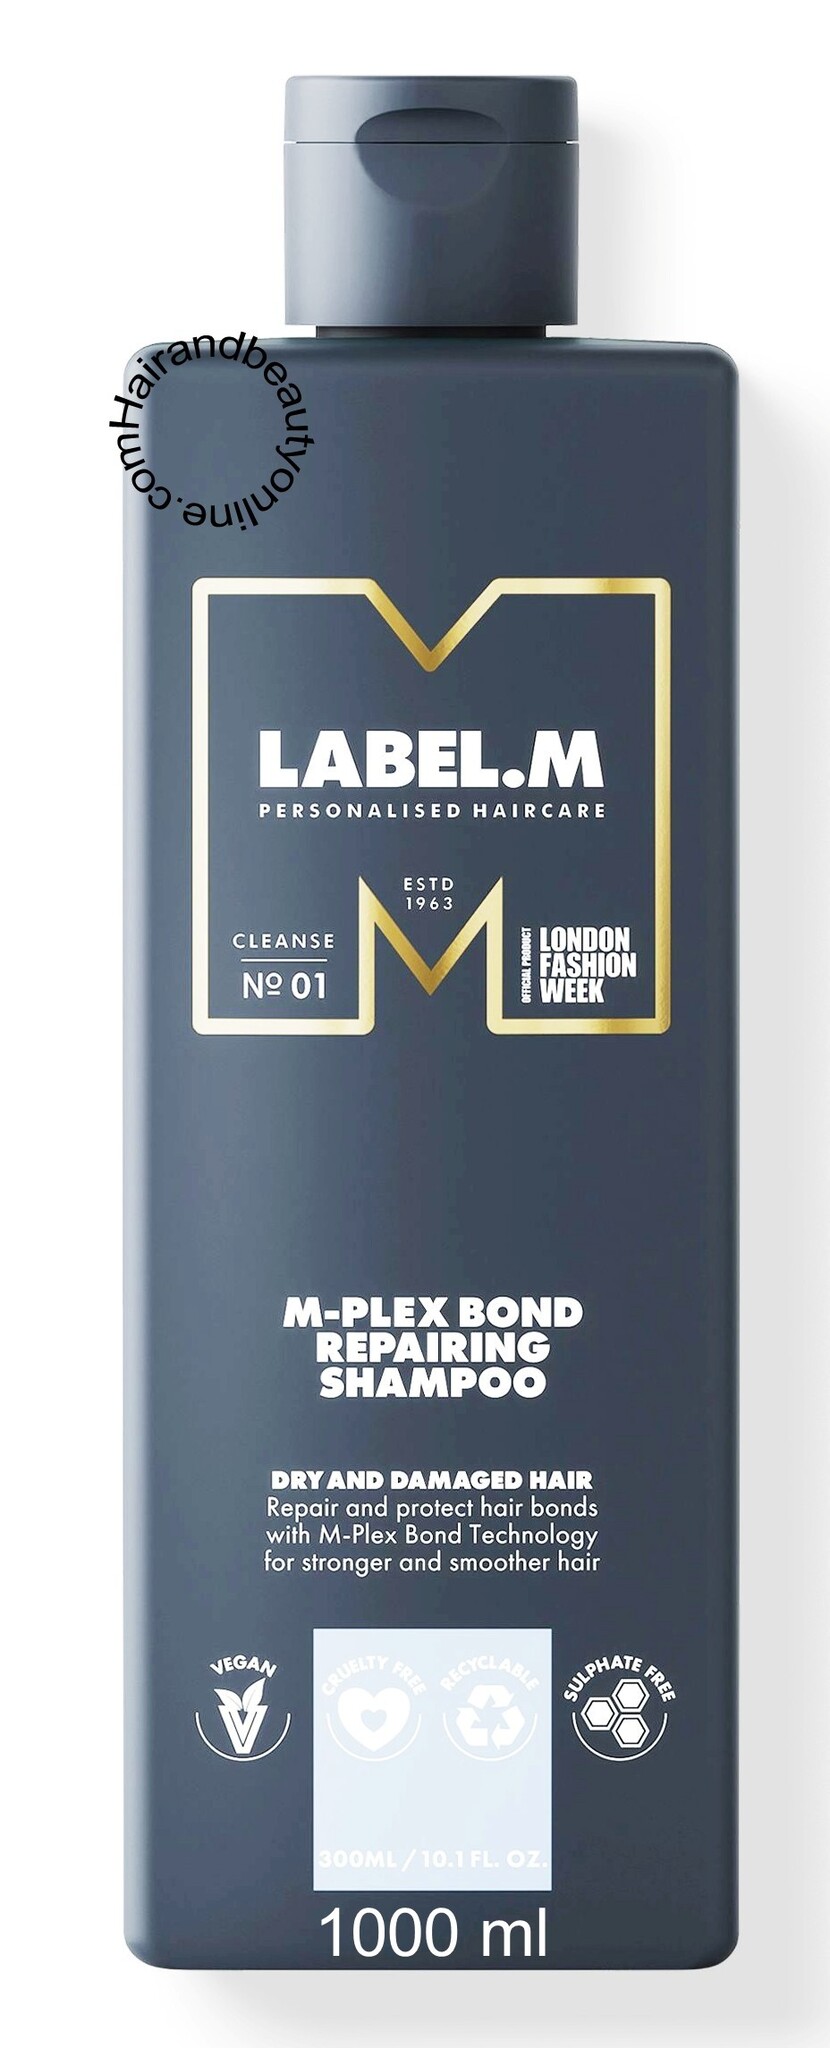 Label.m M-Plex Bond Repairing Shampoo 1000ml